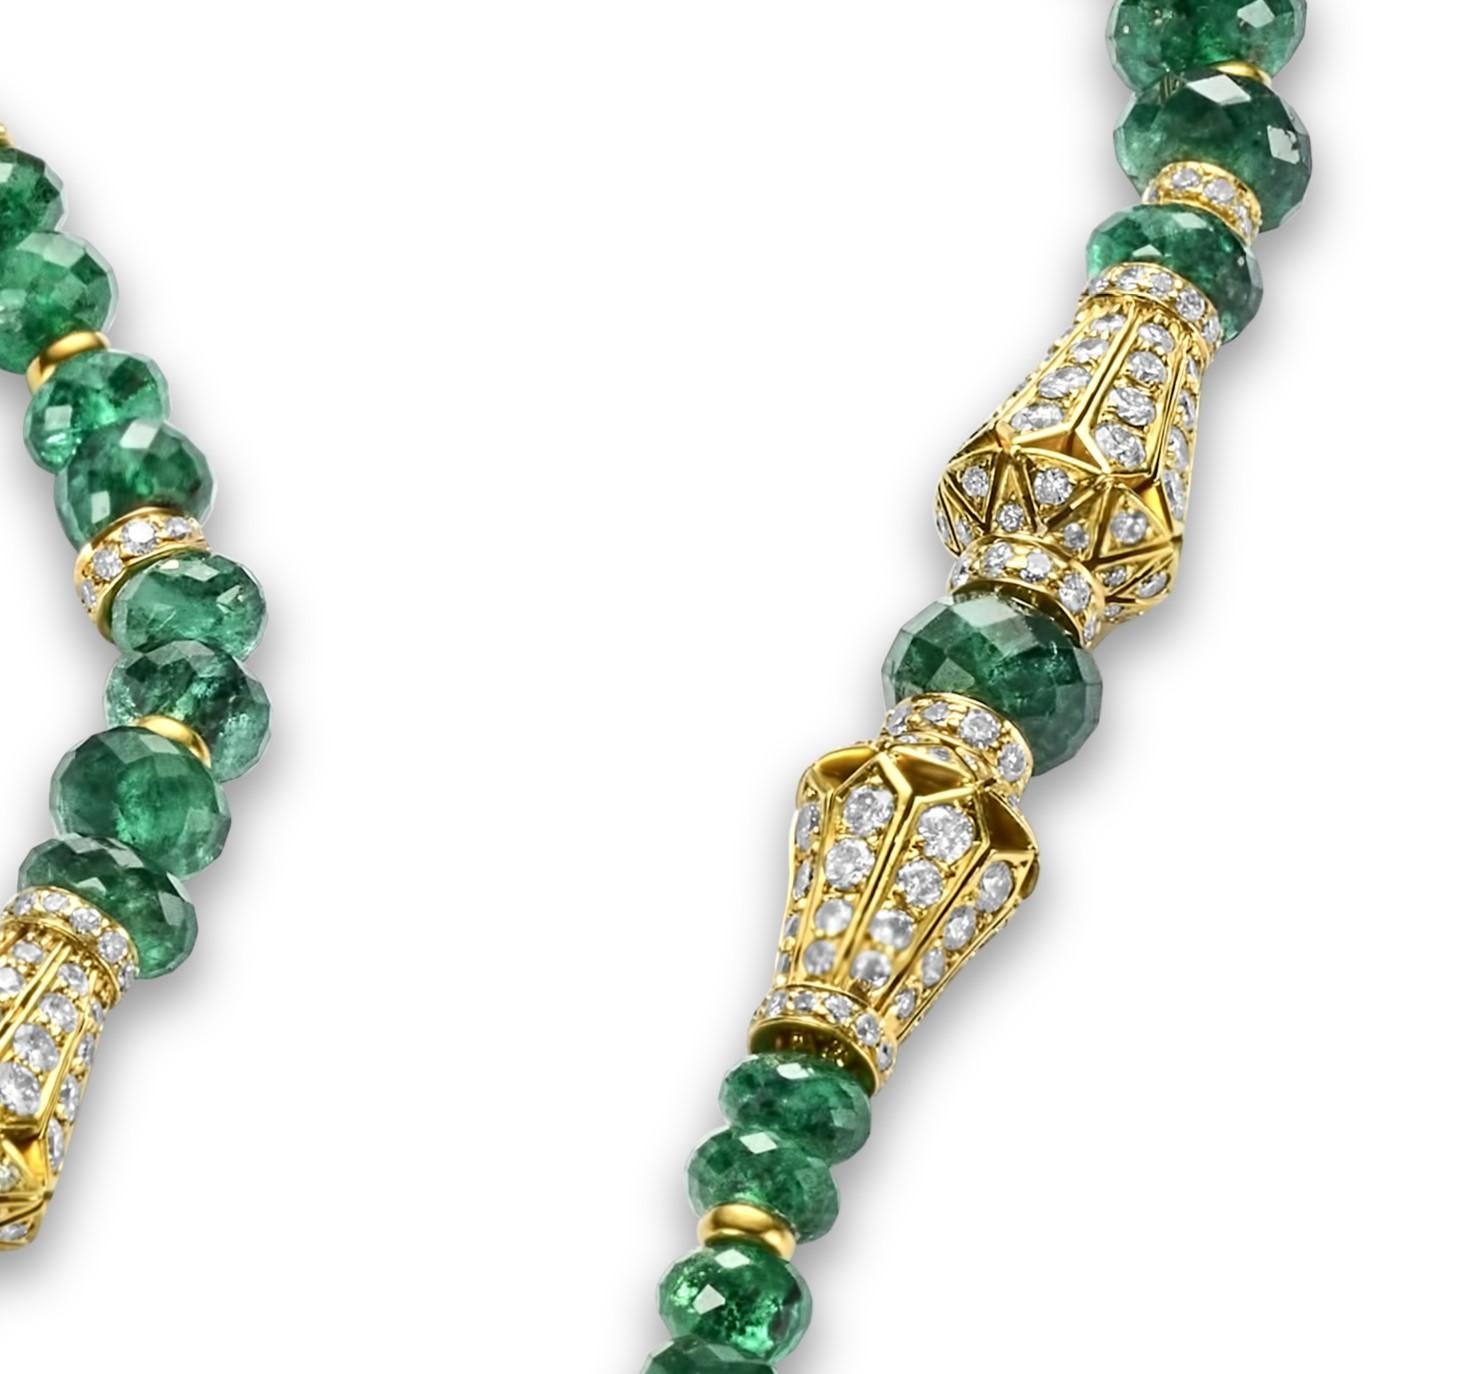 Women's or Men's Adler Genèva 18kt Gold Necklaces 480ct Faceted Bead Emeralds CGL Certified For Sale